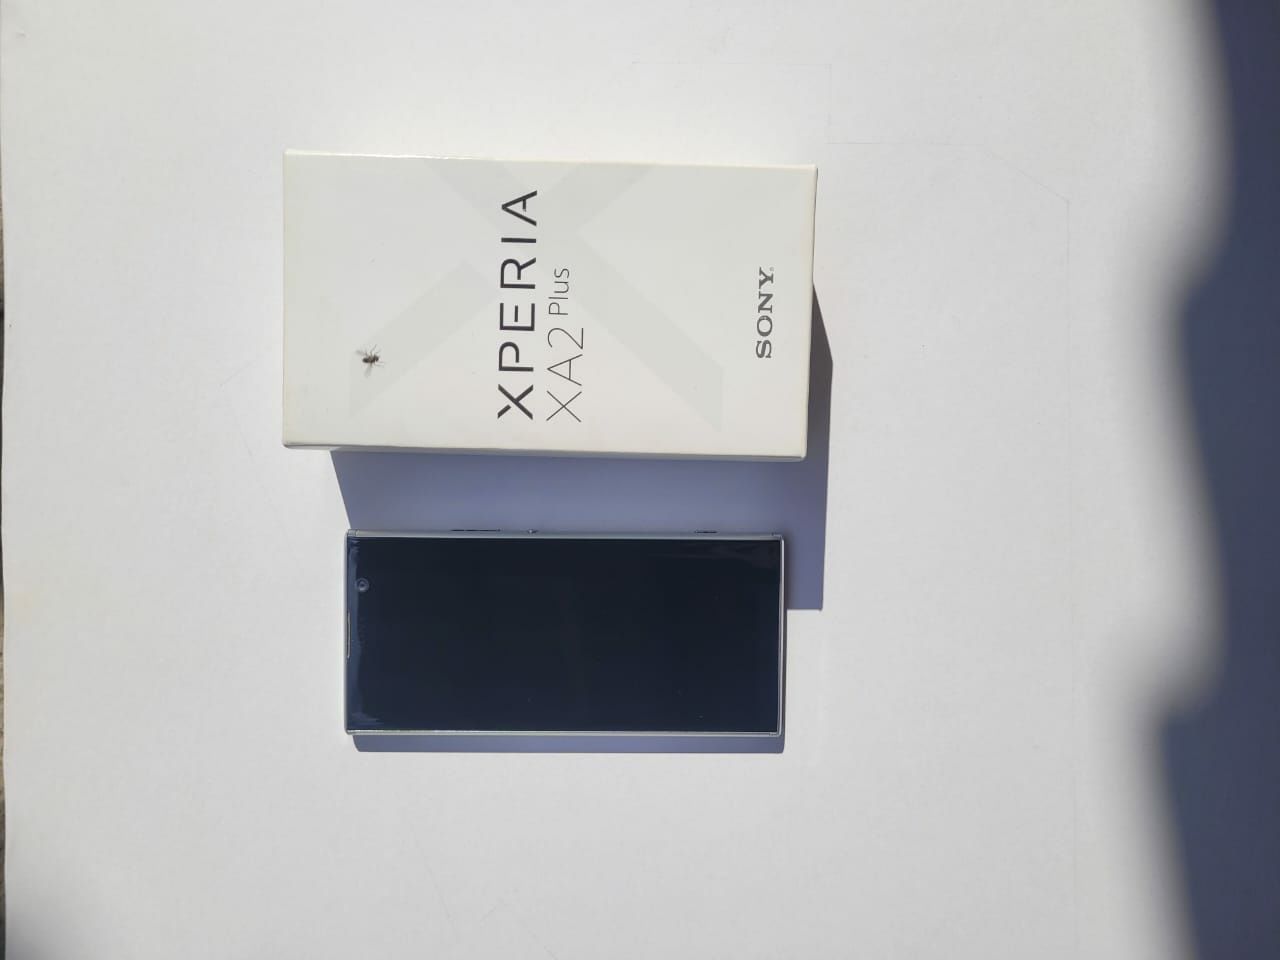 Sony Xperia с гарантией + бесплатно чехлы